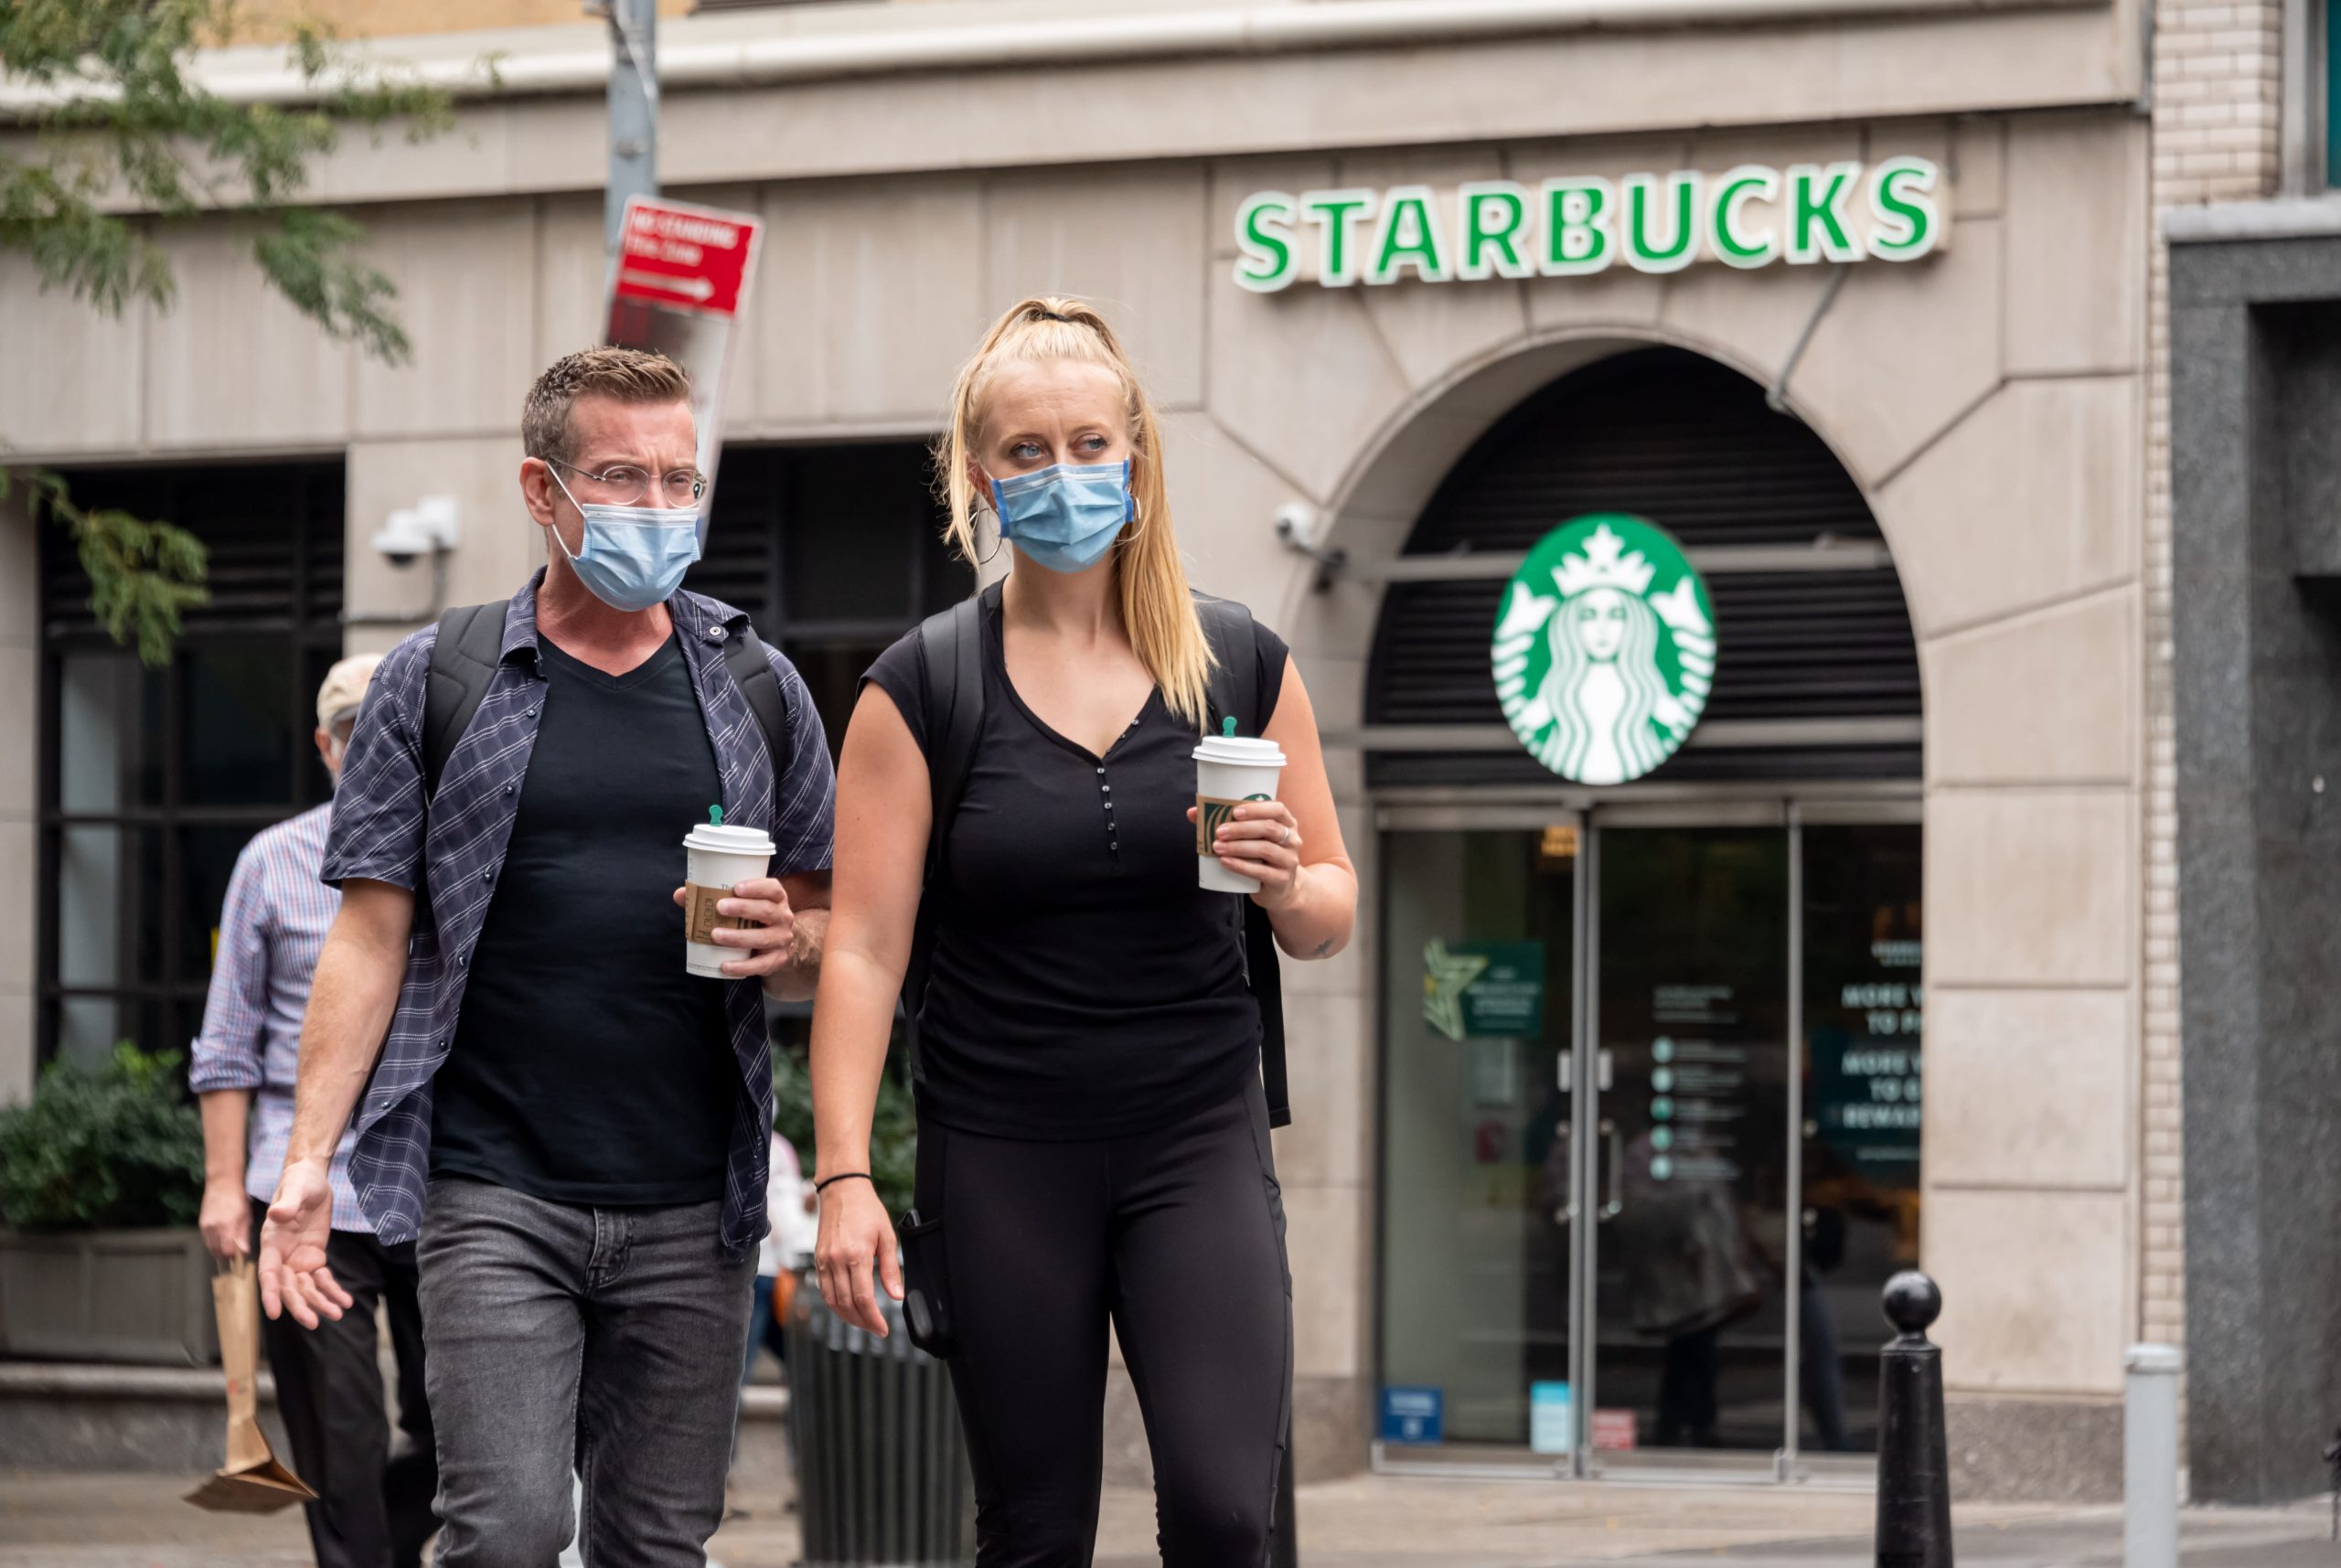 Starbucks (SBUX) This fall 2020 earnings high estimates